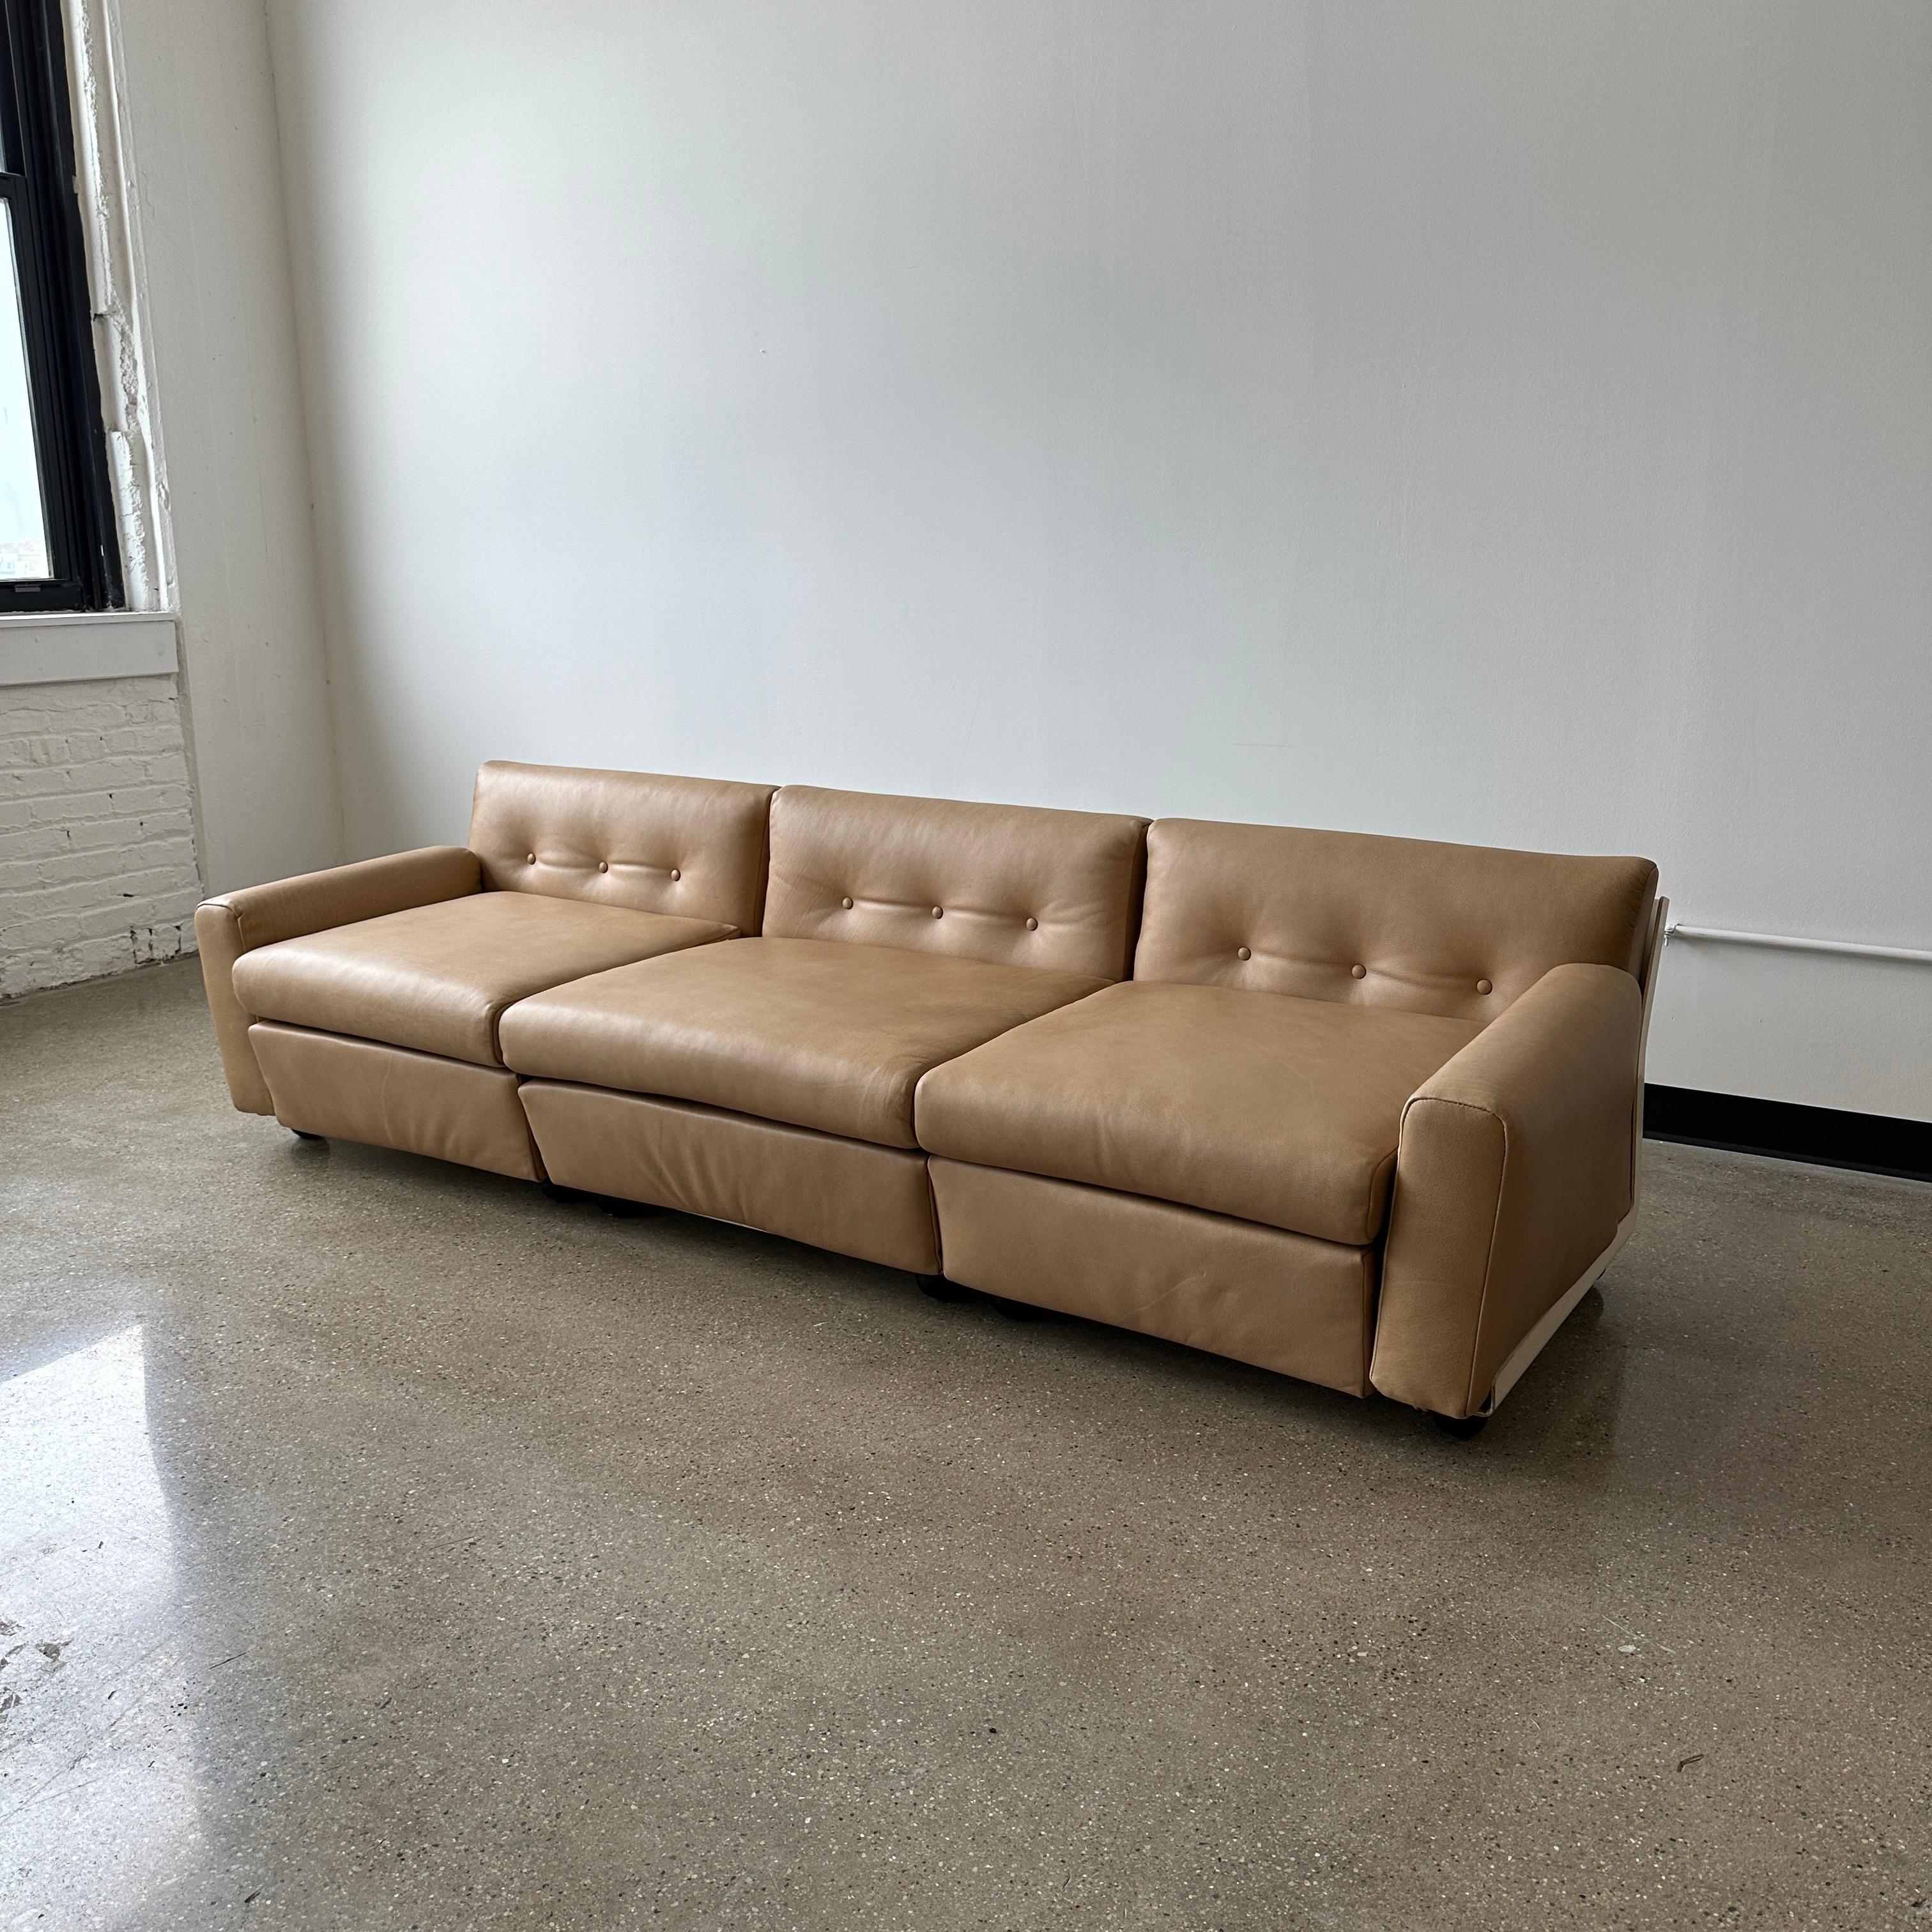 Early Mario Bellini “Amanta” Sofa In Good Condition For Sale In Chicago, IL